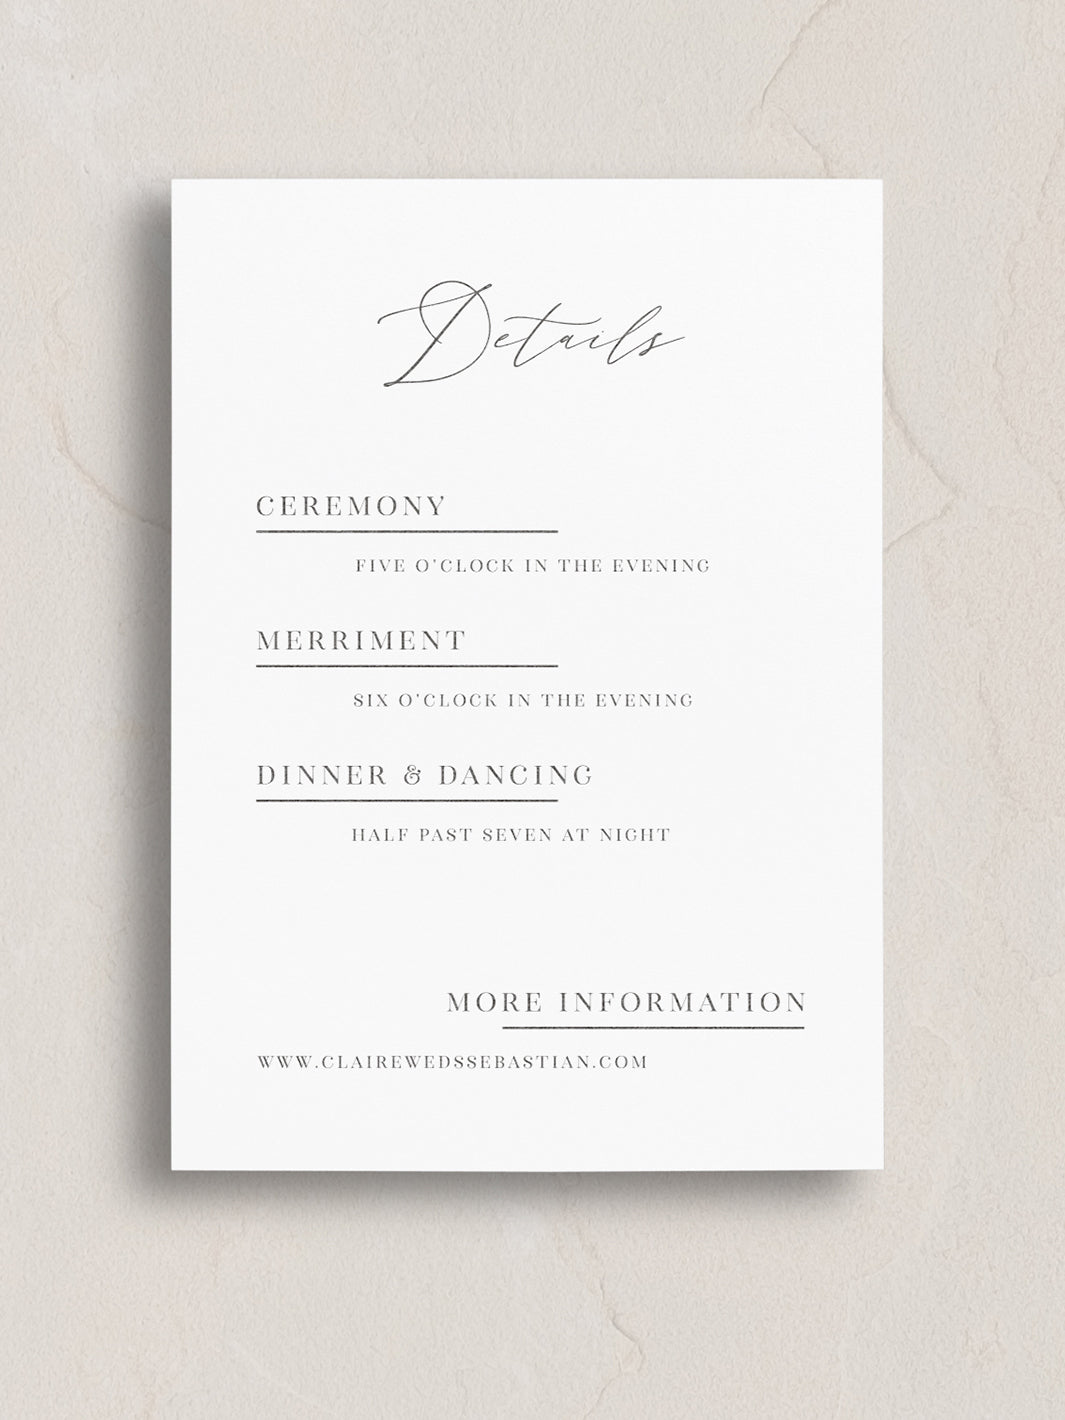 Marx Semi-Custom Wedding Invitation Suite from Leighwood Design Studio